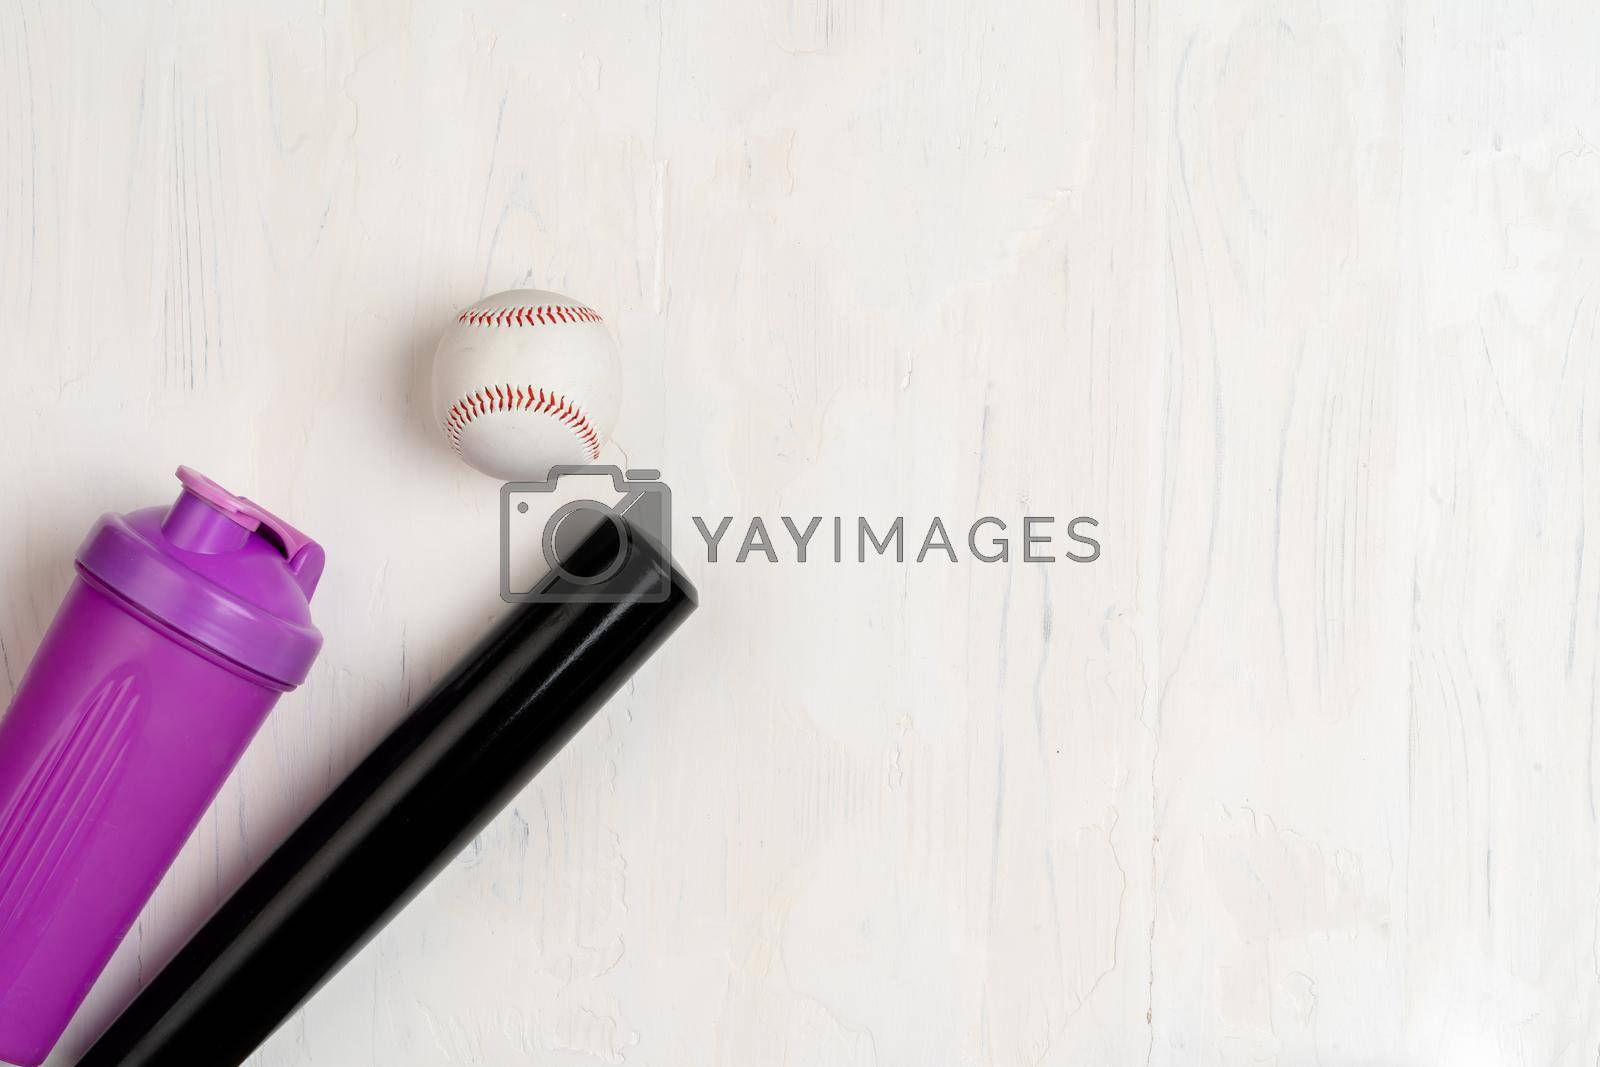 Royalty free image of Baseball bat and ball, view from above by Fabrikasimf